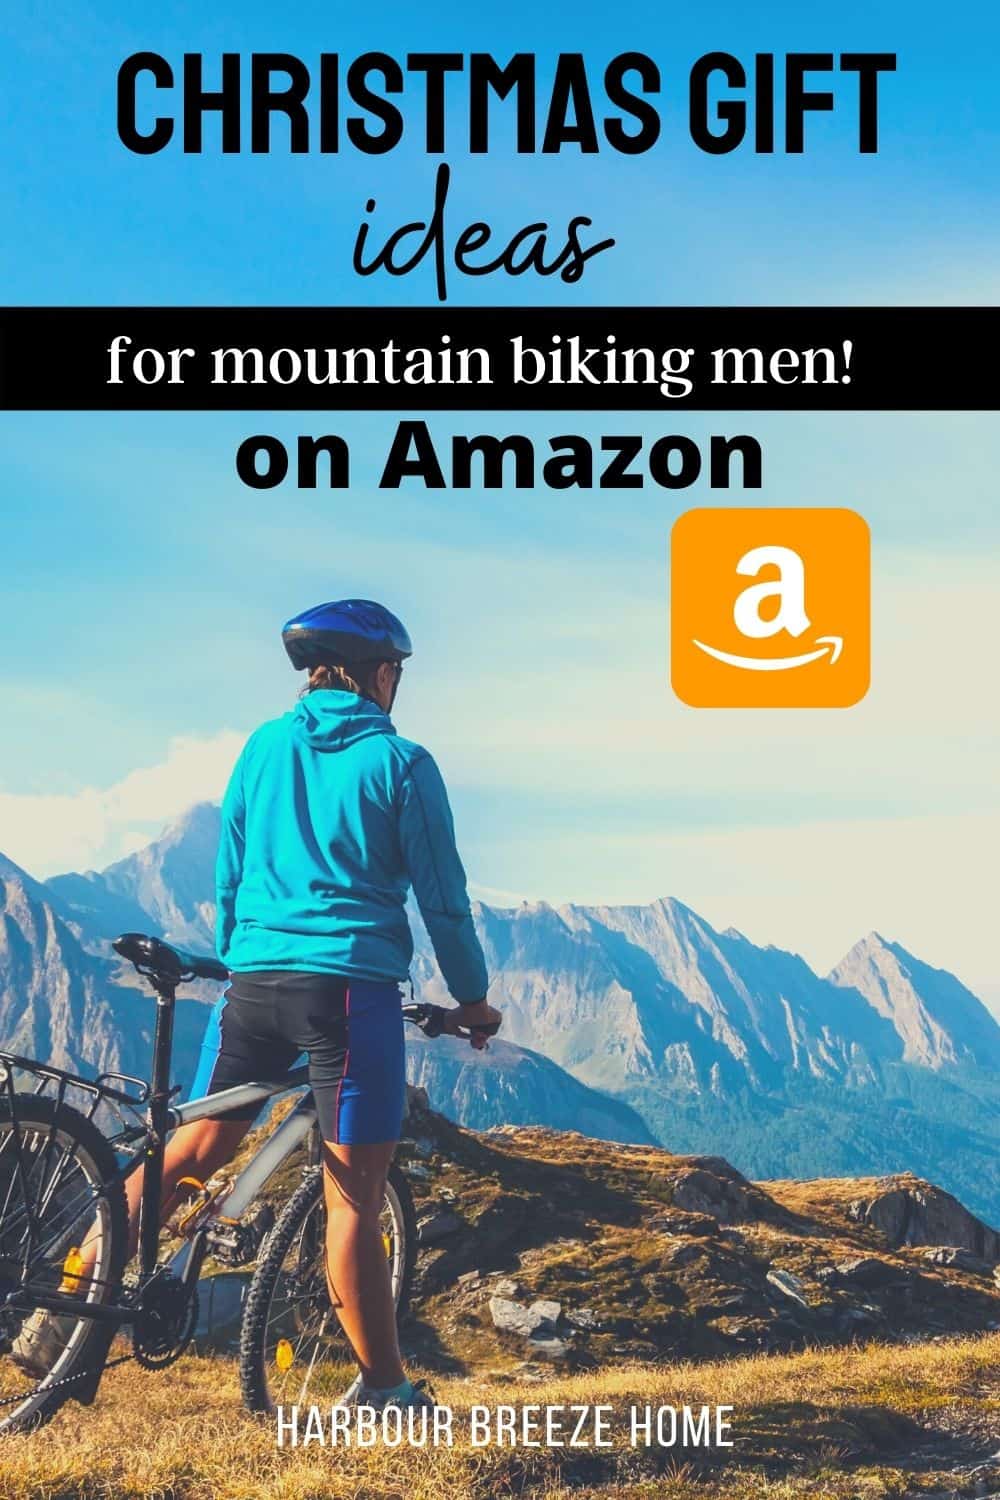 Christmas gift ideas for mountain biking men 2021